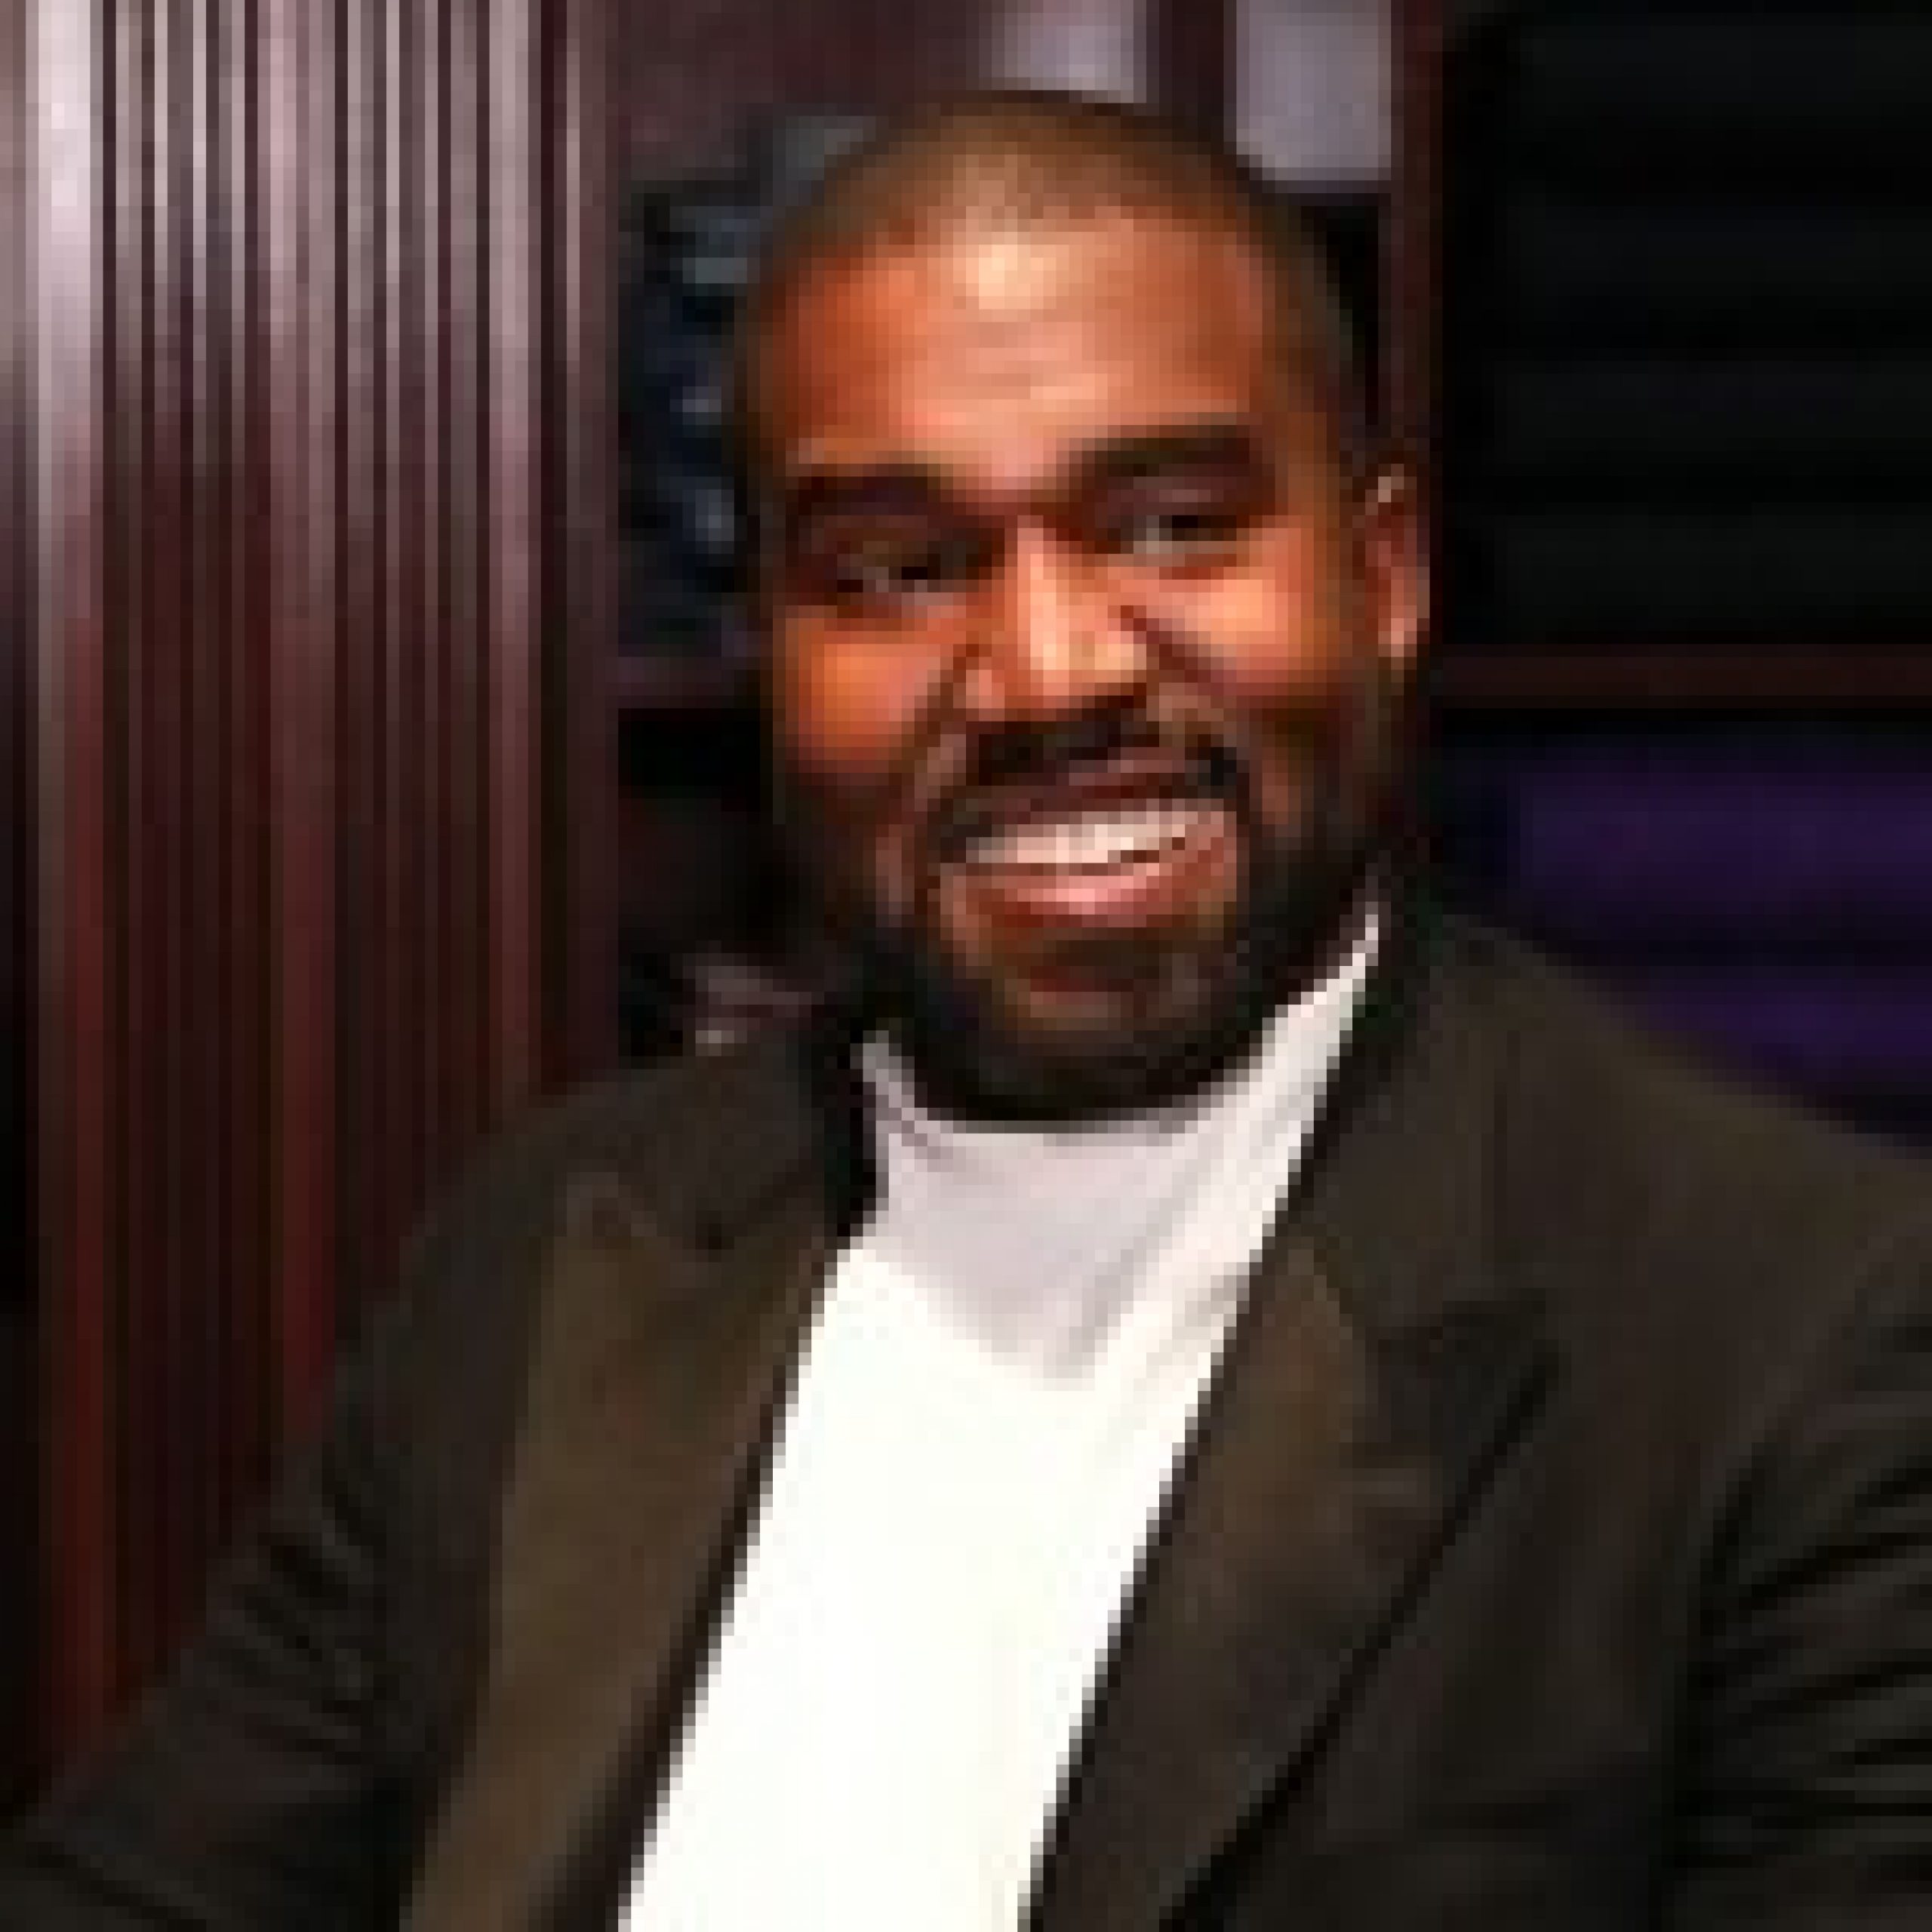 Kanye West Announces ‘Donda’ Listening Event in Atlanta